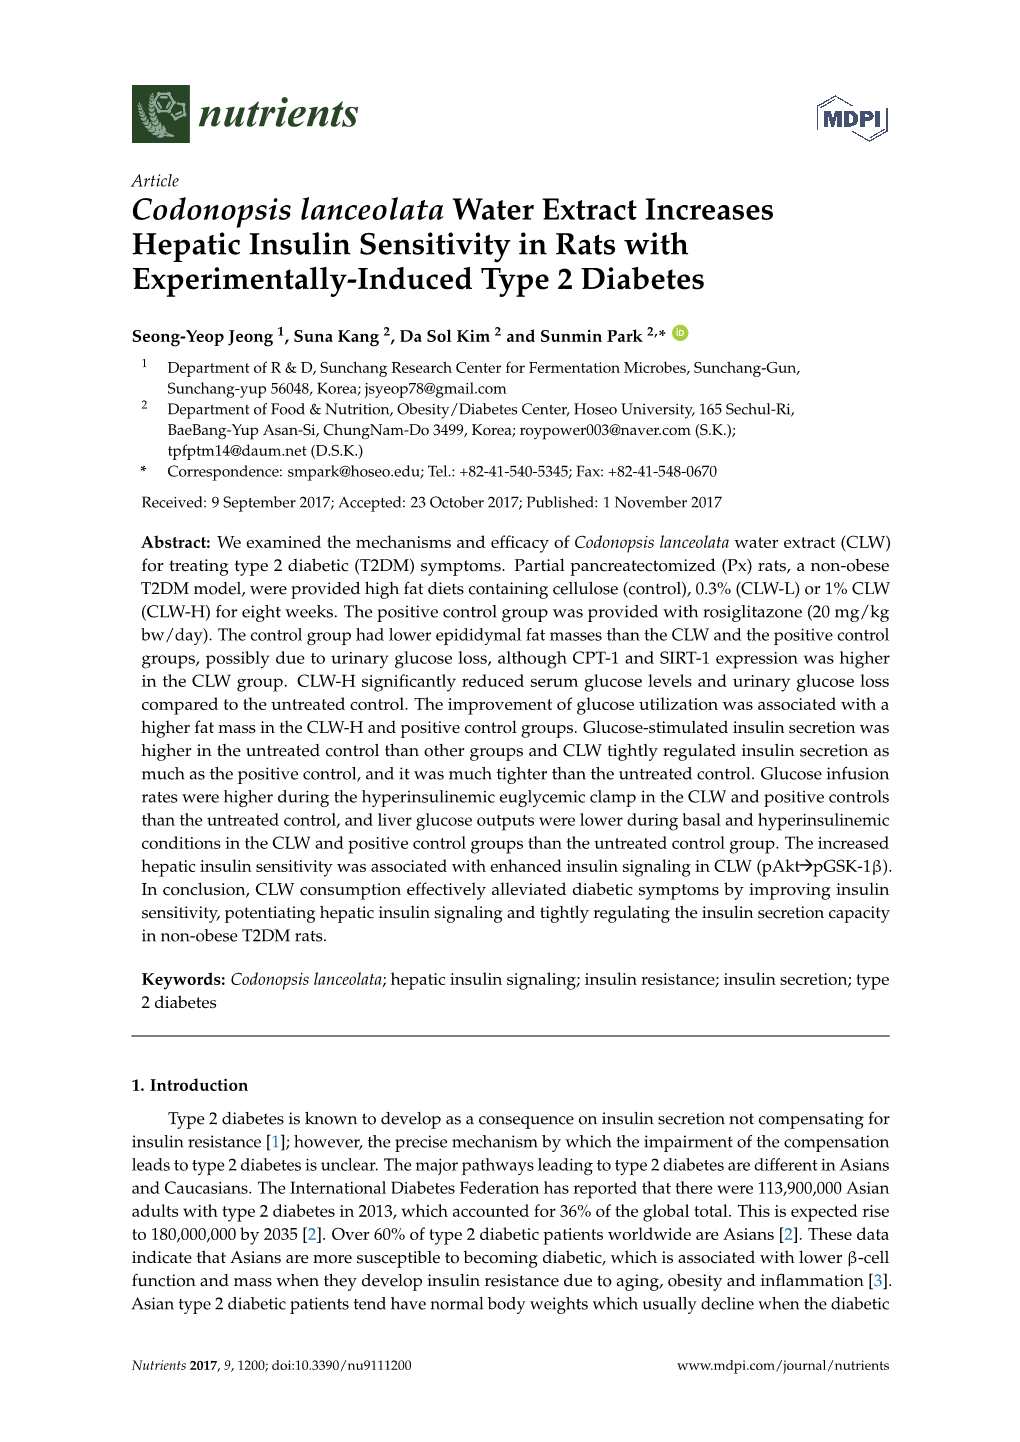 Codonopsis Lanceolata Water Extract Increases Hepatic Insulin Sensitivity